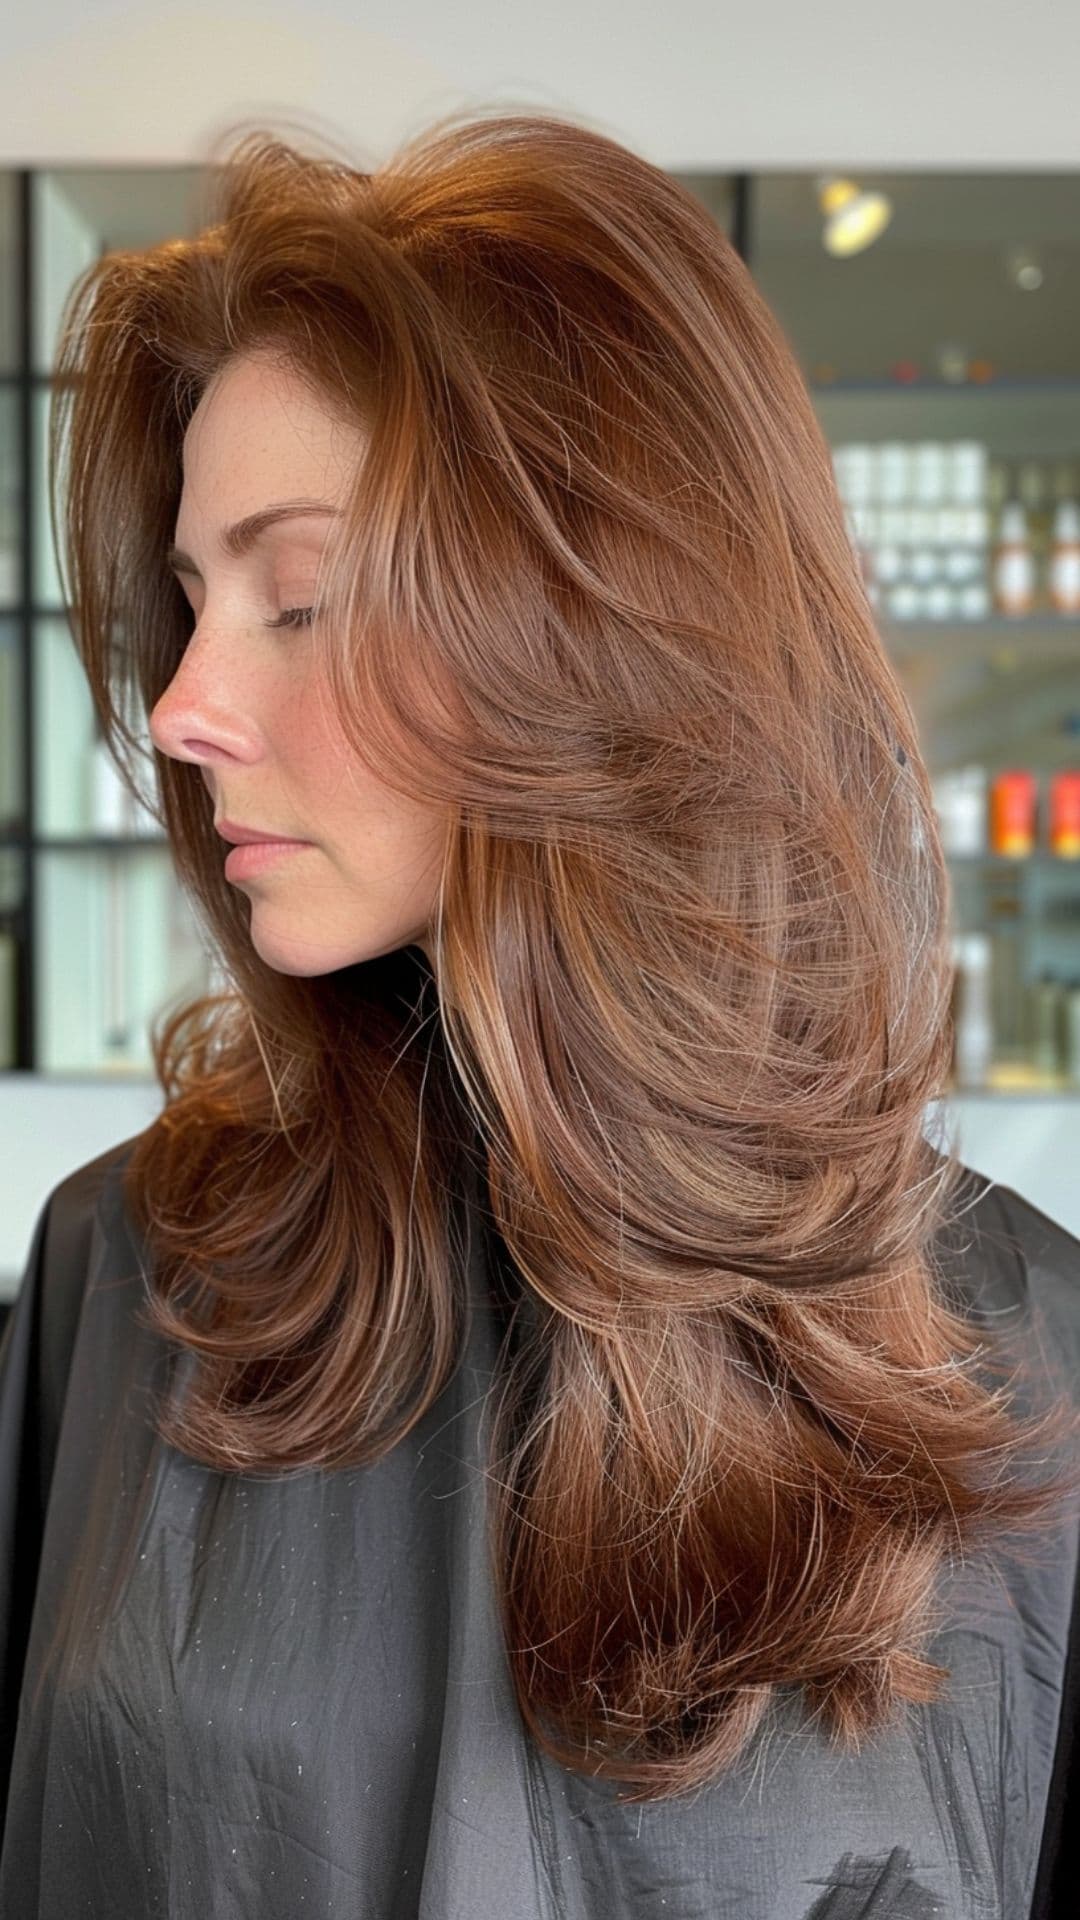 A woman modelling a warm chestnut brown hair.